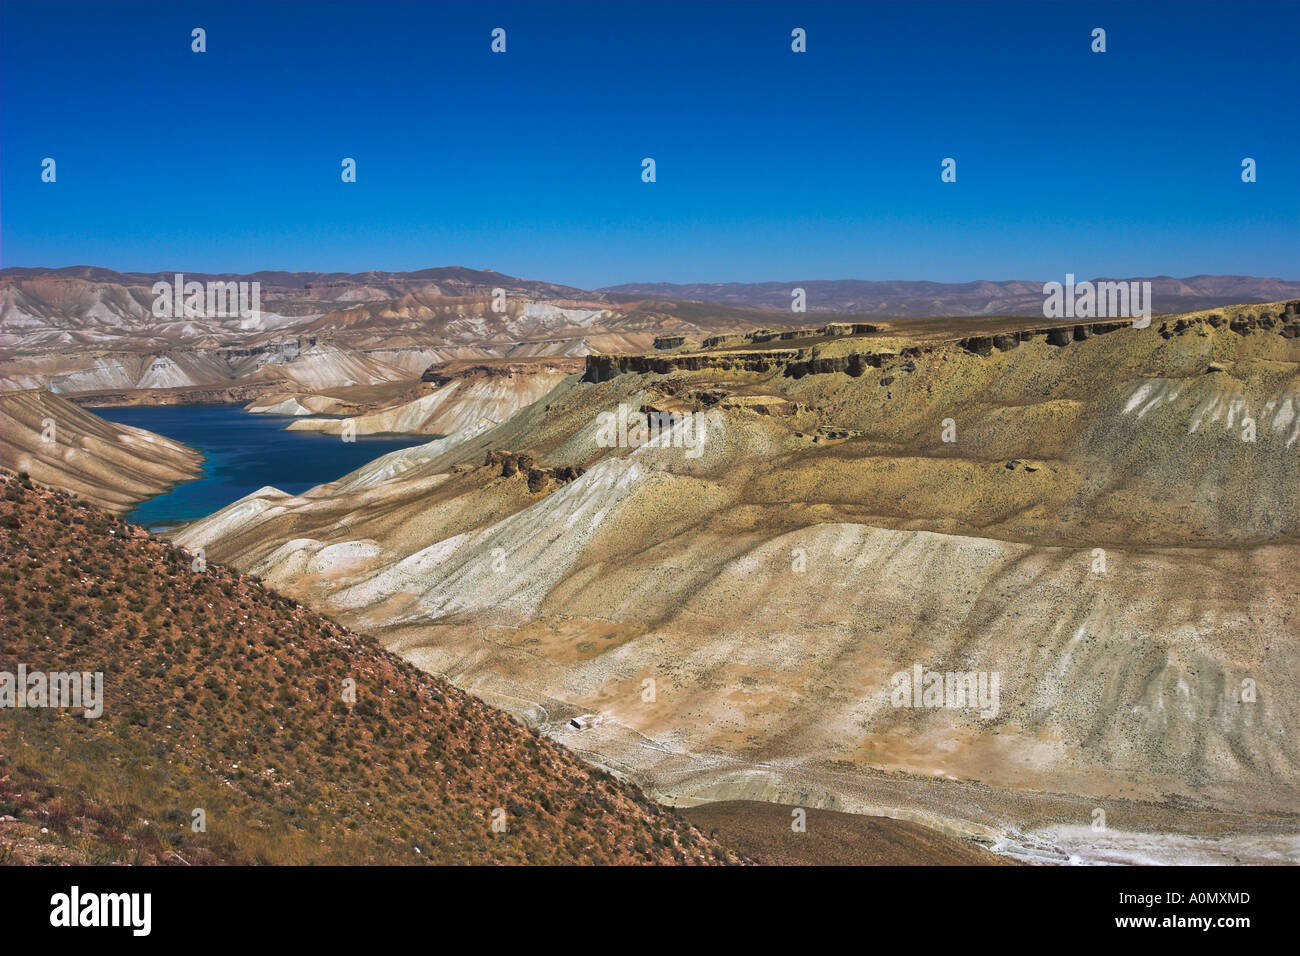 AFGHANISTAN Band E Amir Dam of the King crater Lakes Band I Zulfiqar the main lake Stock Photo